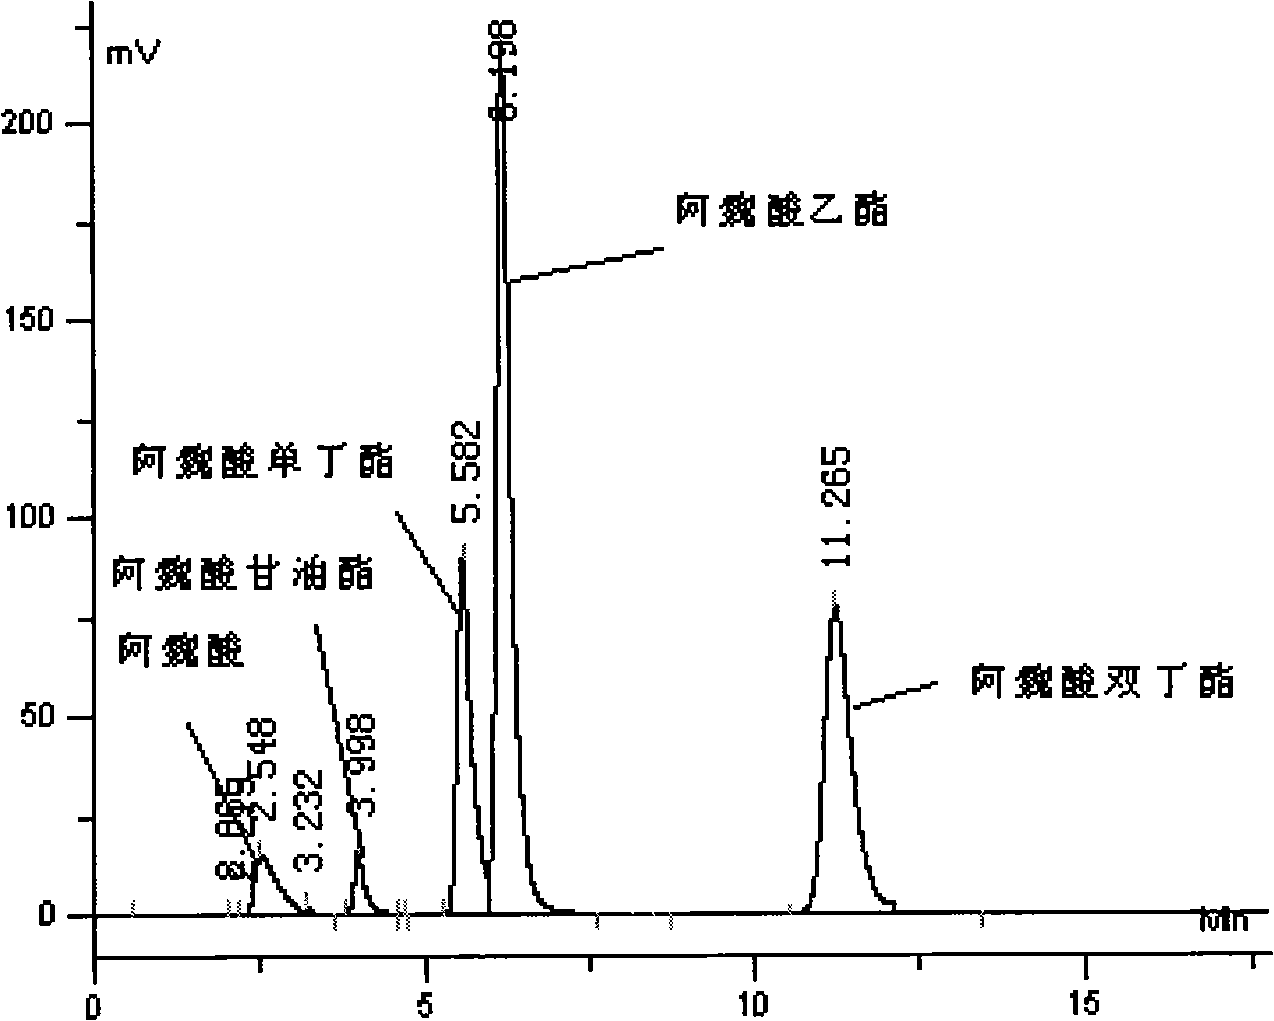 Method for analyzing ferulaic acid butyric glyceride by high performance liquid chromatography